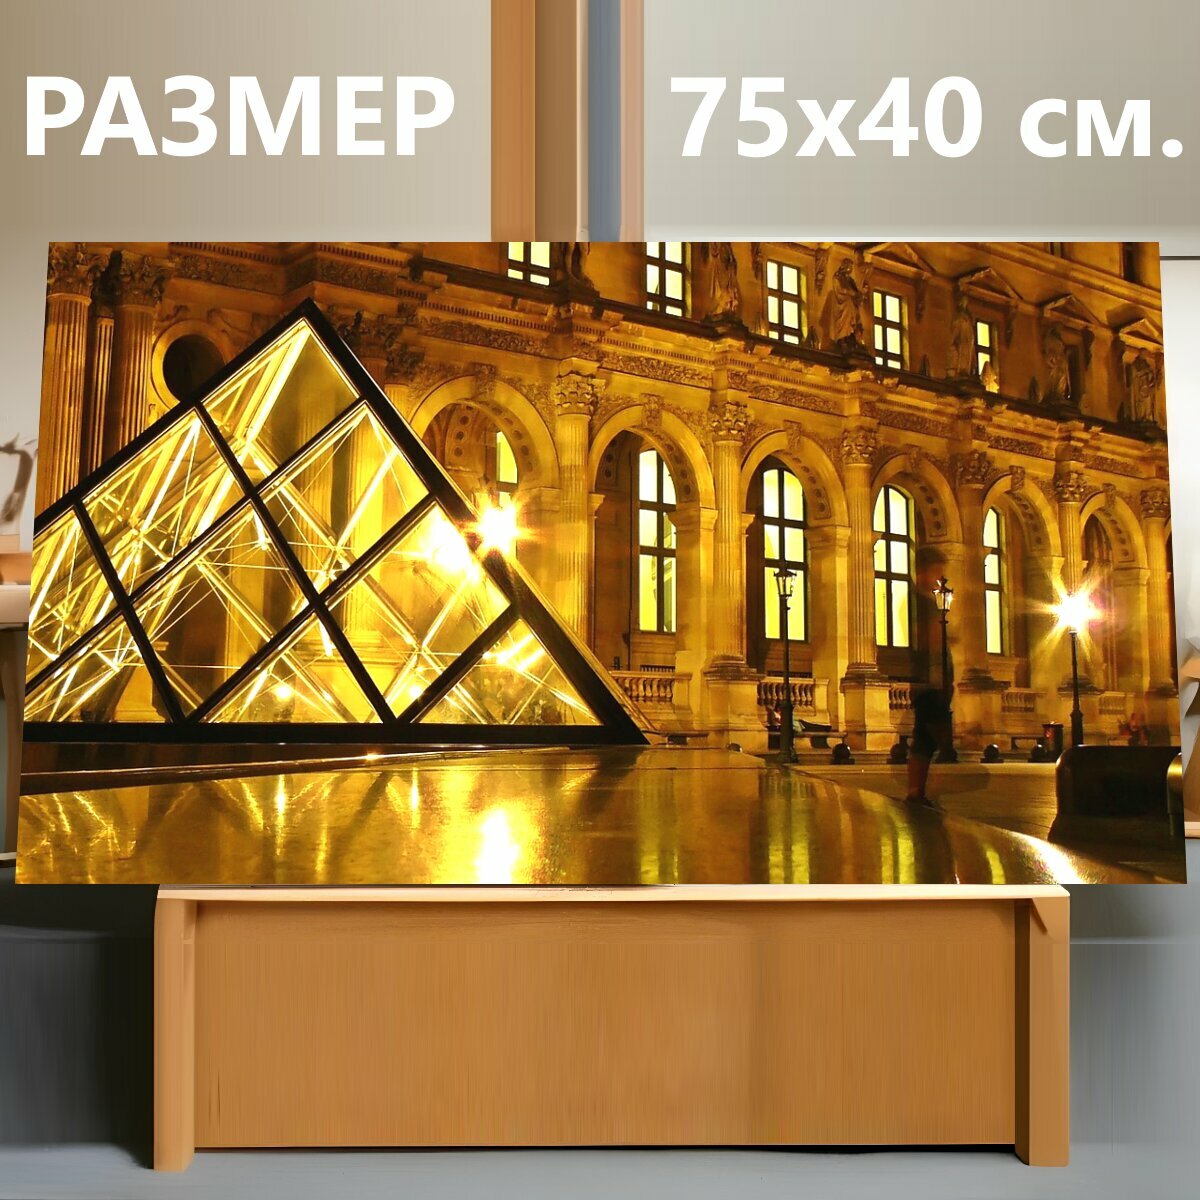 Картина на холсте "Париж, лувр, музей" на подрамнике 75х40 см. для интерьера